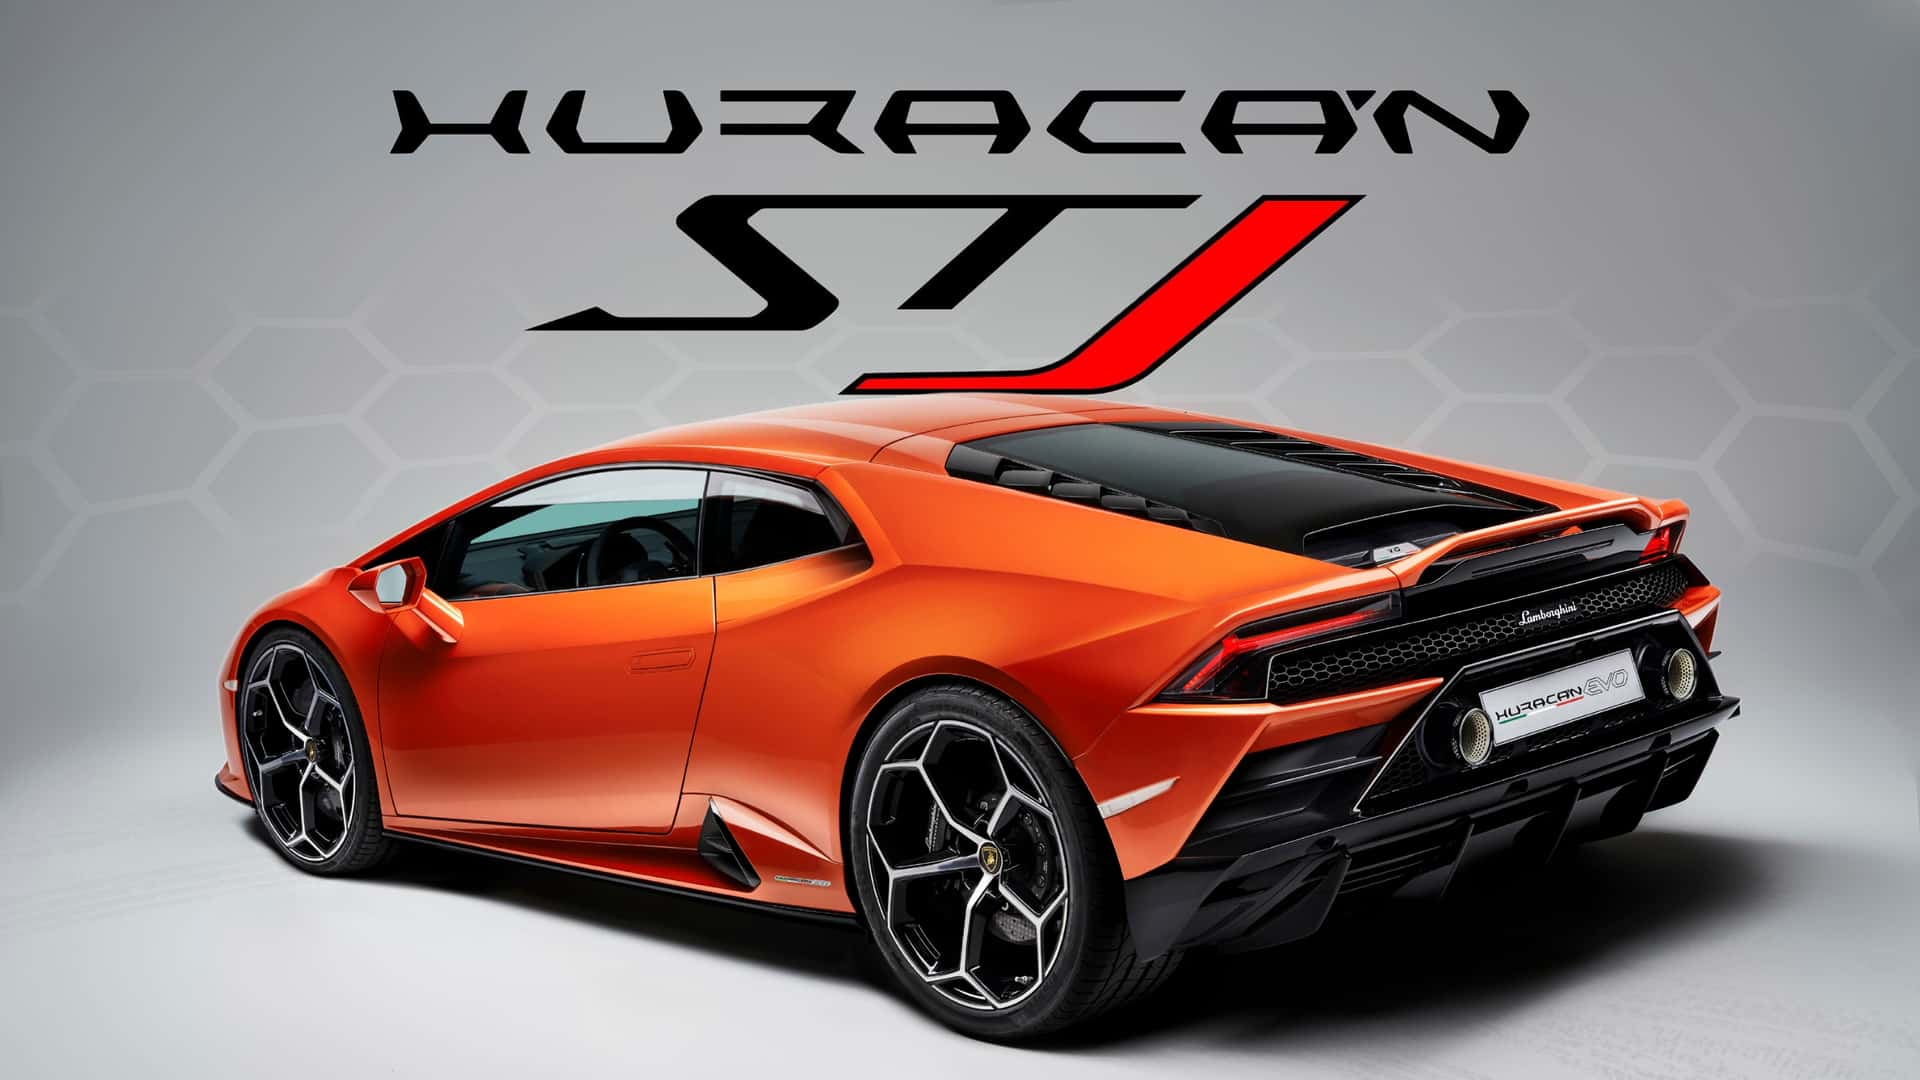 Lamborghini Seeks Trademark for 'Huracan STJ' for Potential Limited Edition Model